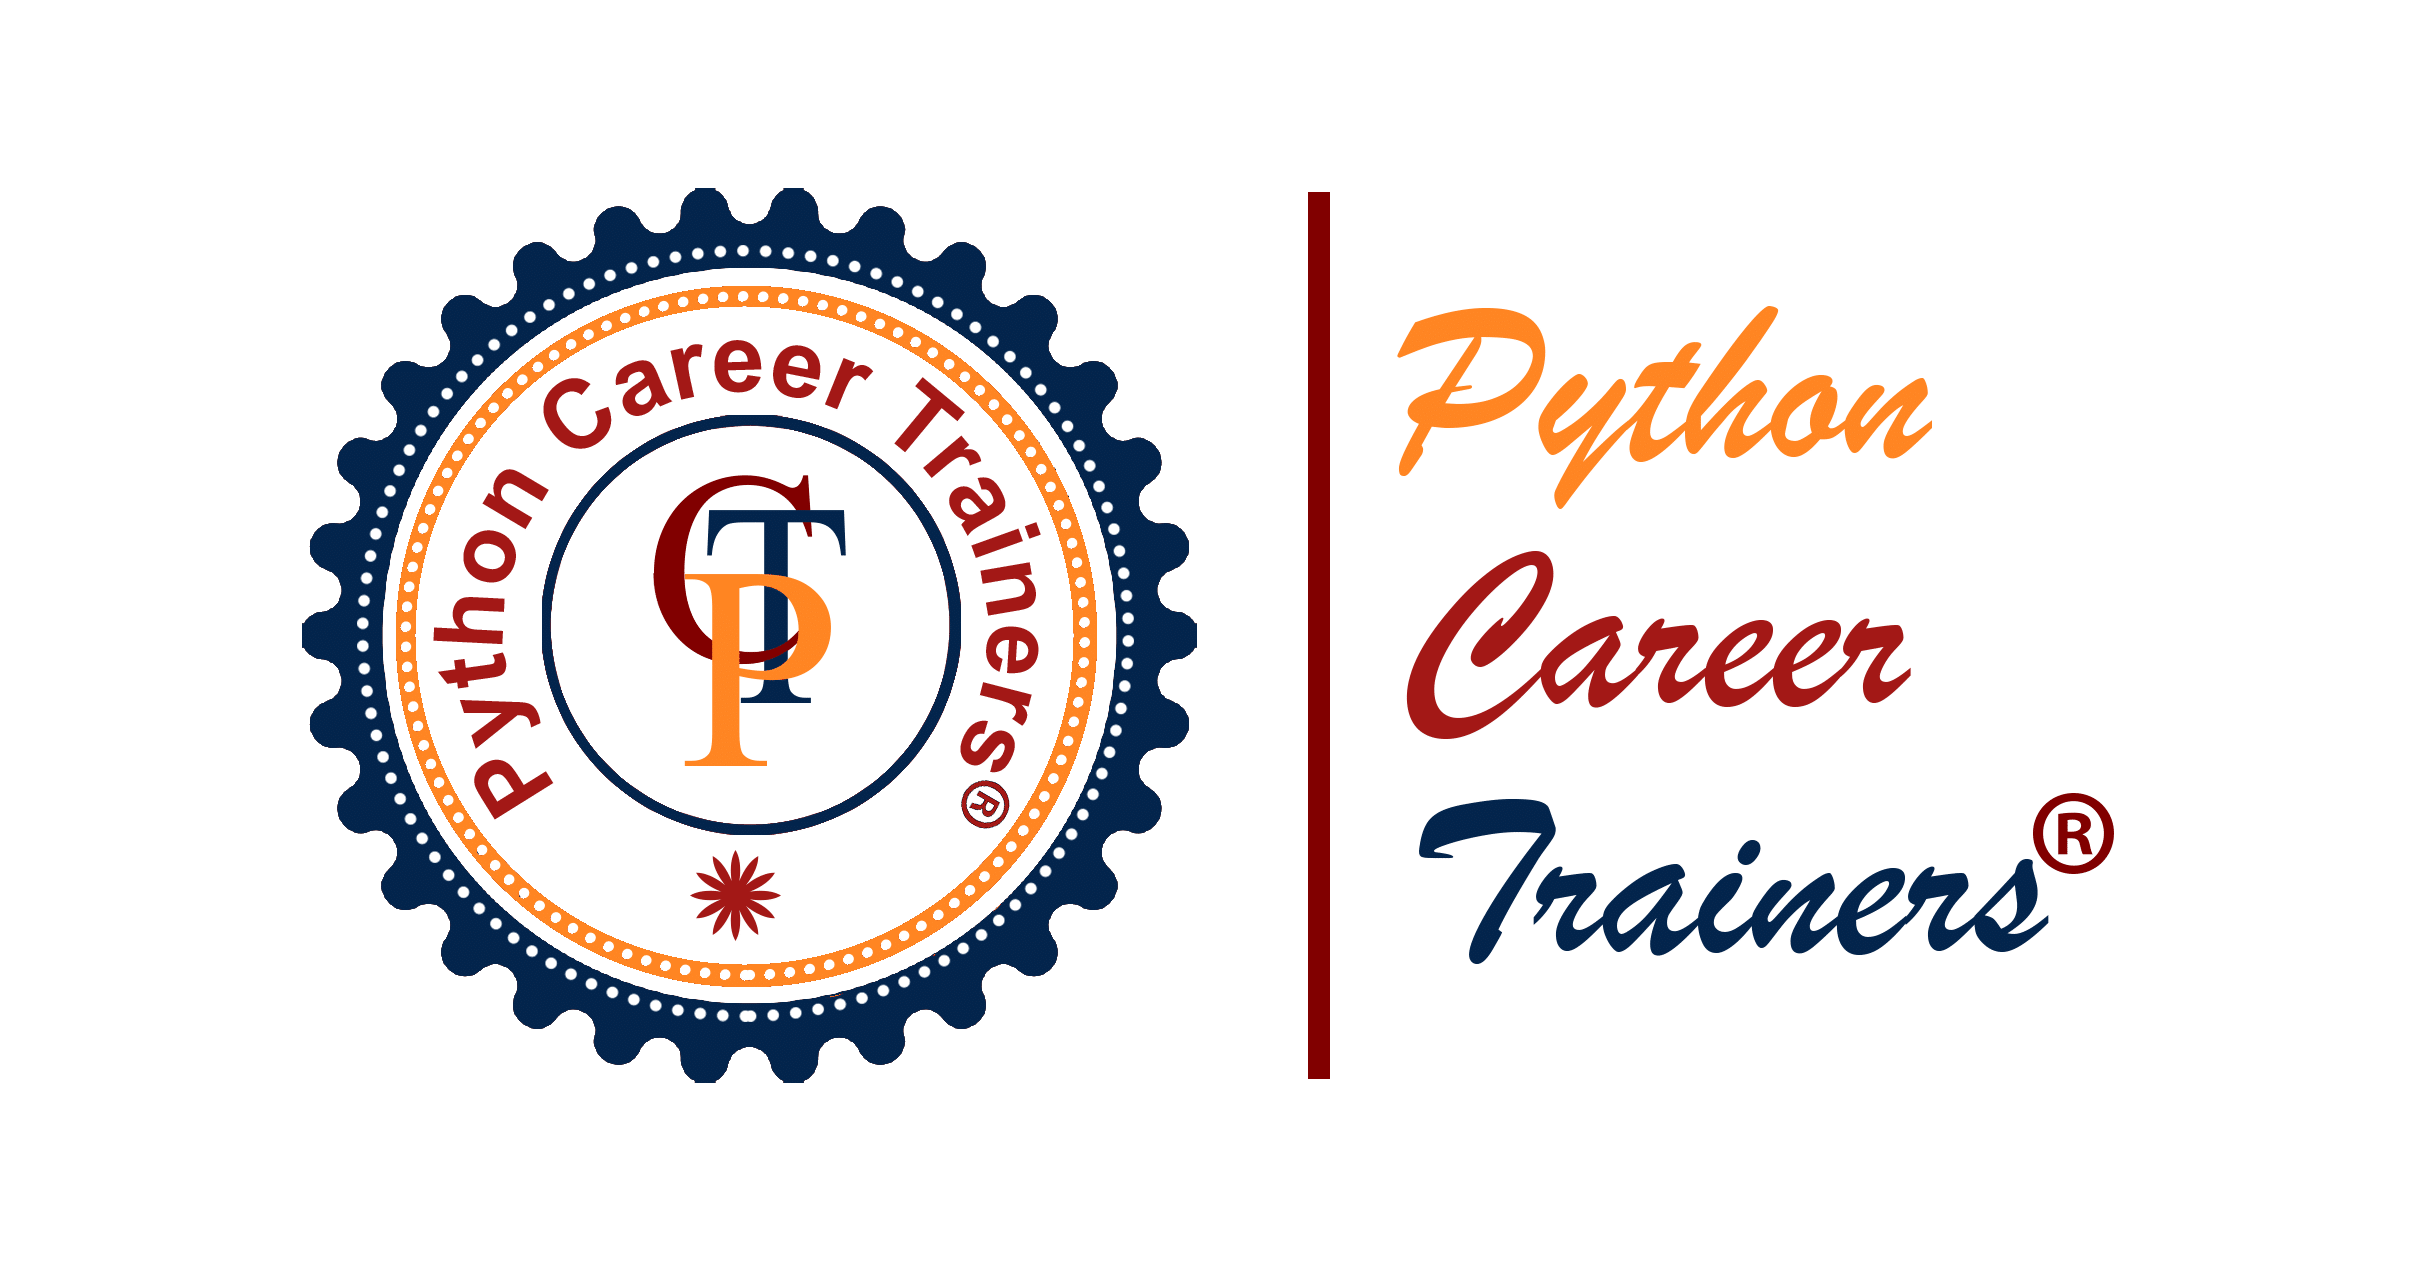 Python Career Trainers logo